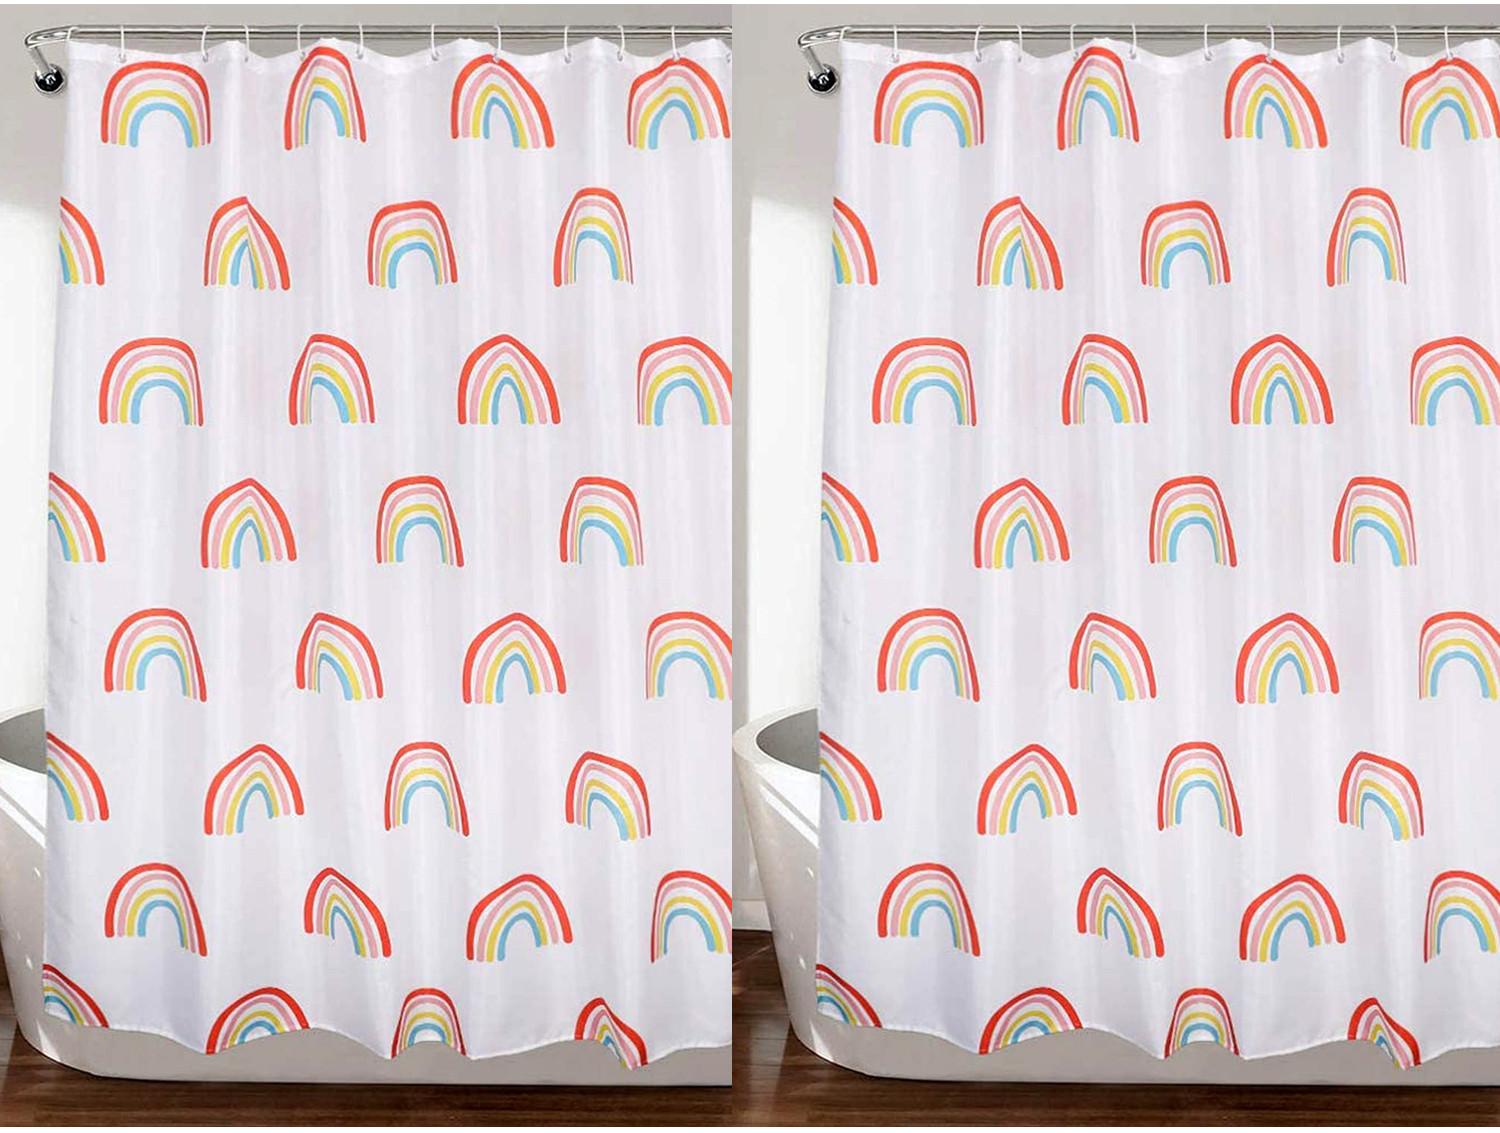 Kuber Industries 7 Feet PVC Rainbow Print Shower Curtain/AC Curtain For Bathroom, Living Room With 8 Hooks (White)